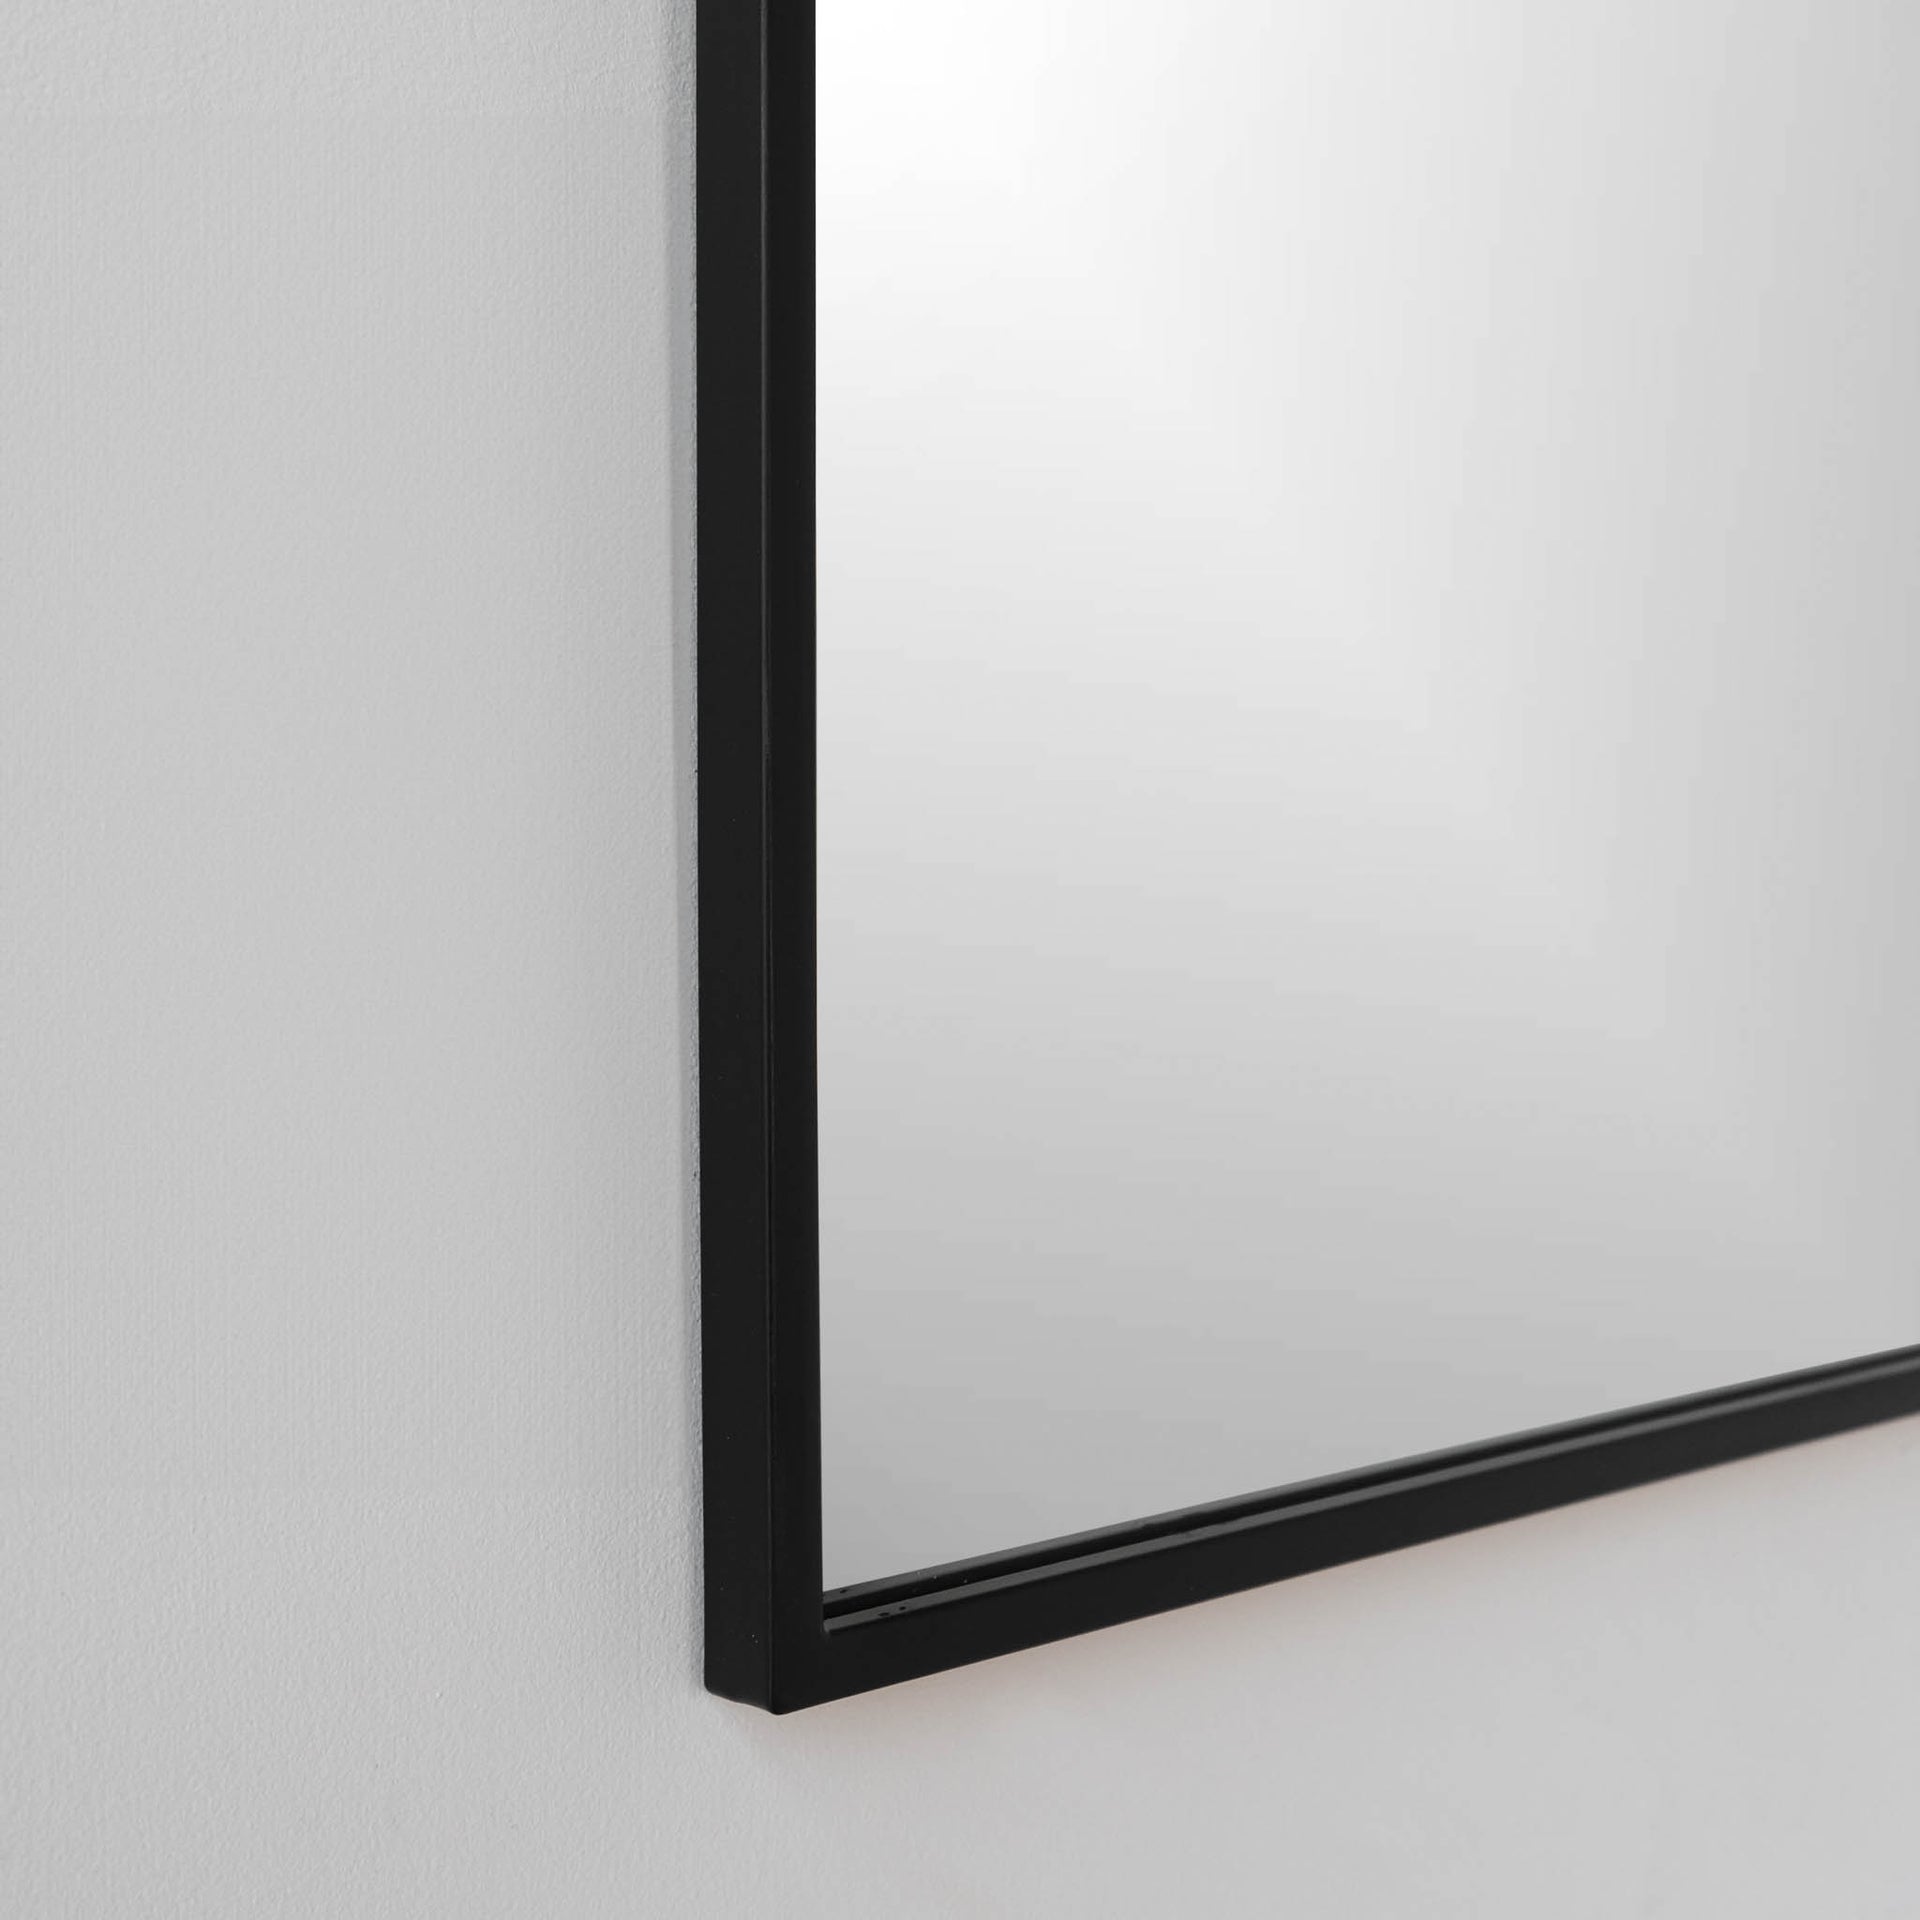 Black iron frame view of Tudor inspired mirror